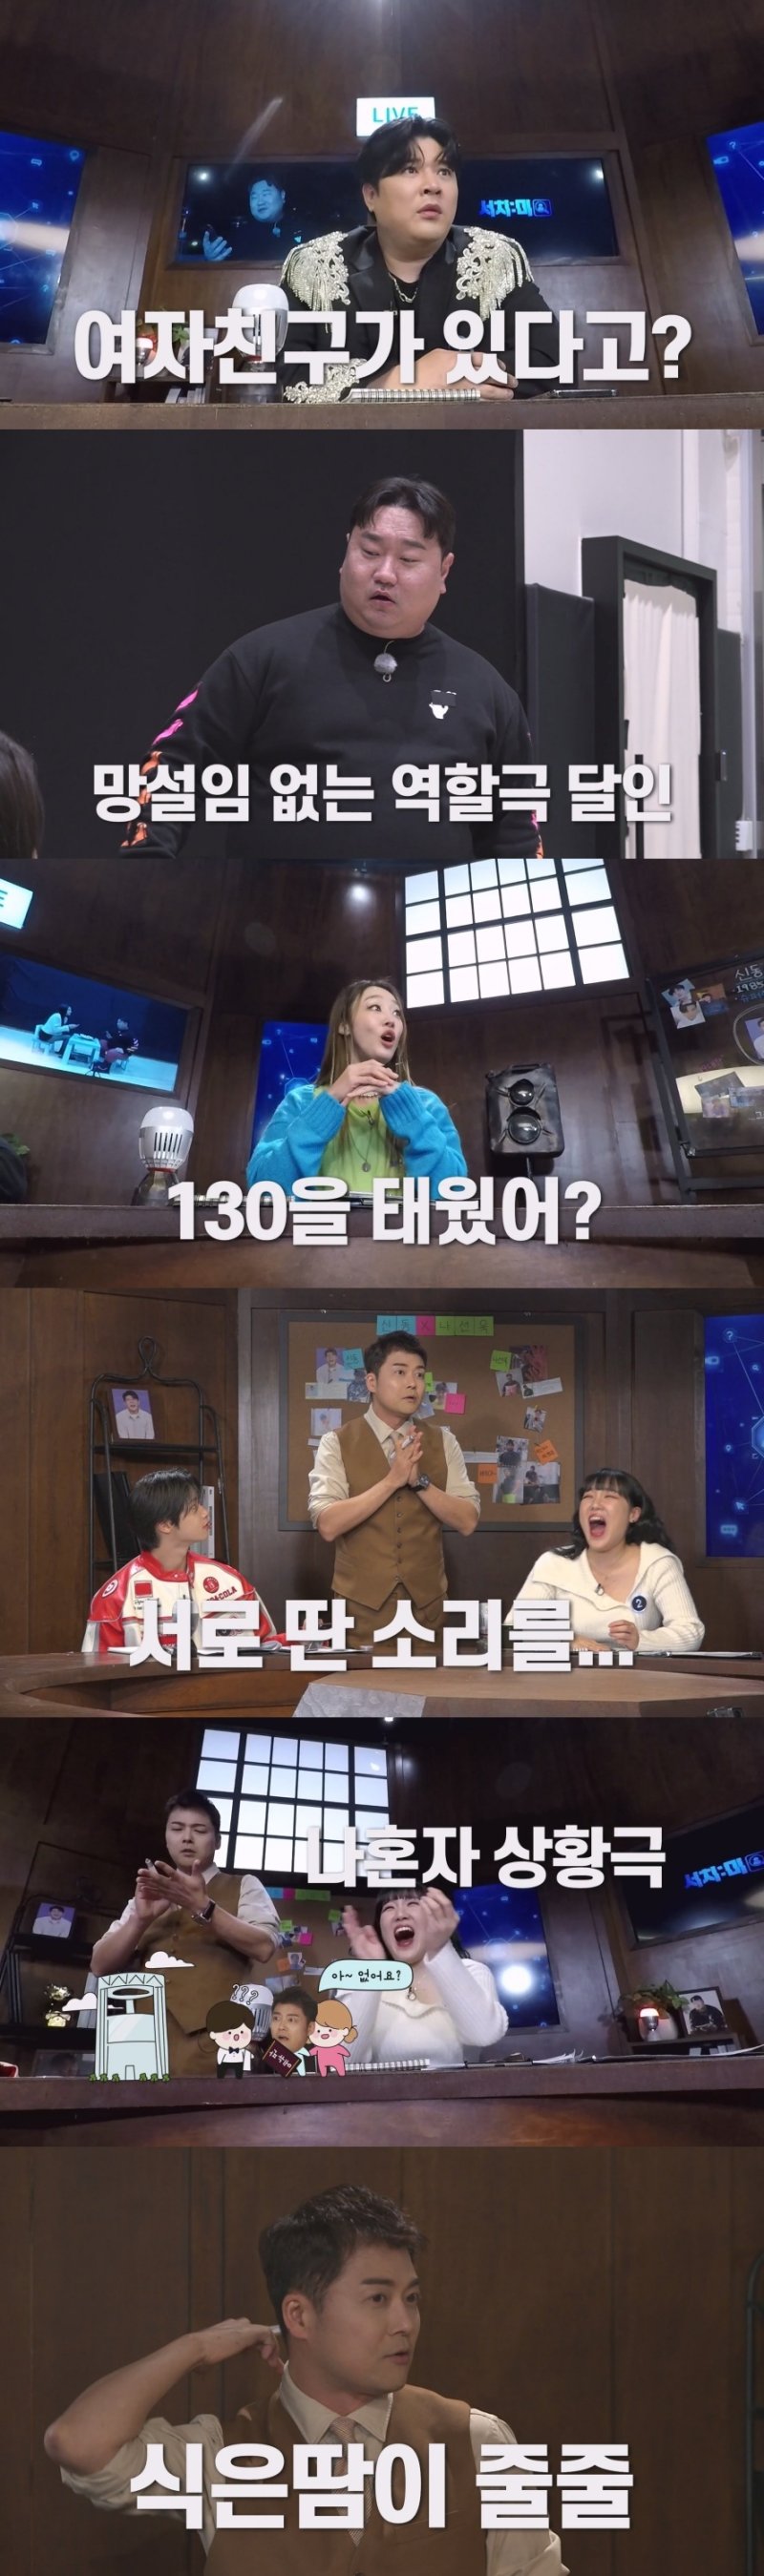 KBS 2TV 서치미 제공